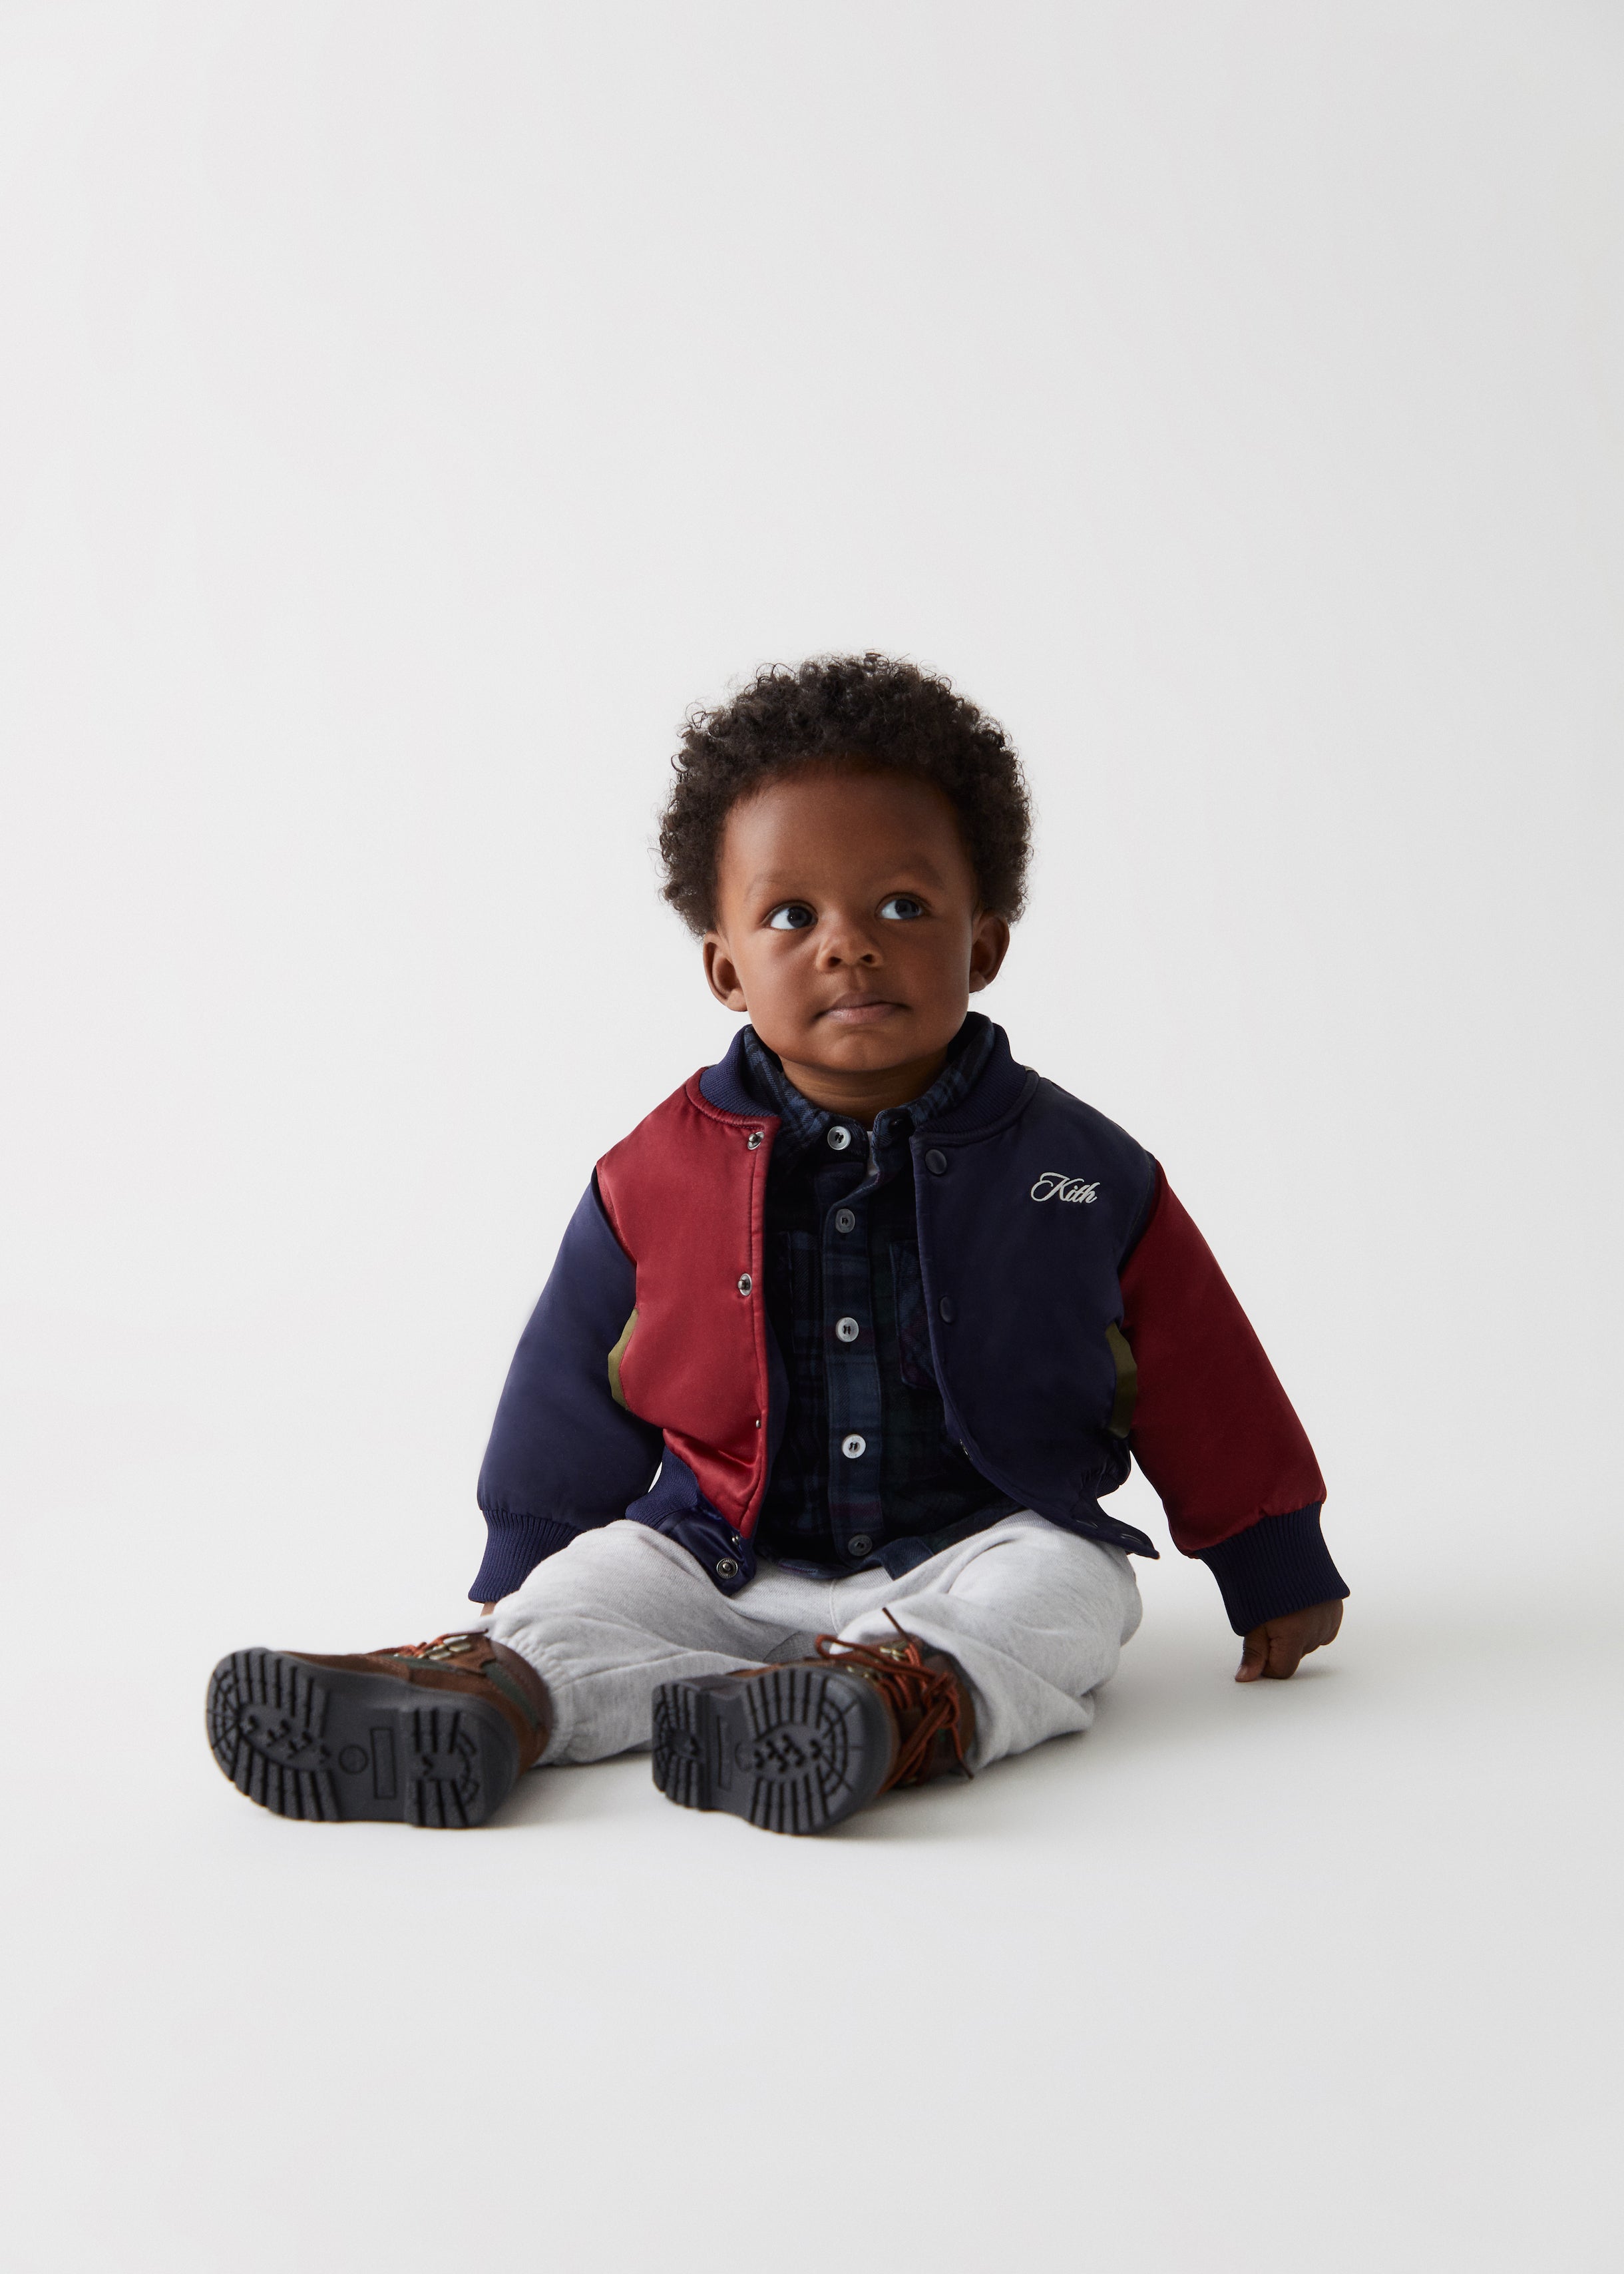 A baby wearing a color-blocked Kith varsity jacket and grey sweatpants.